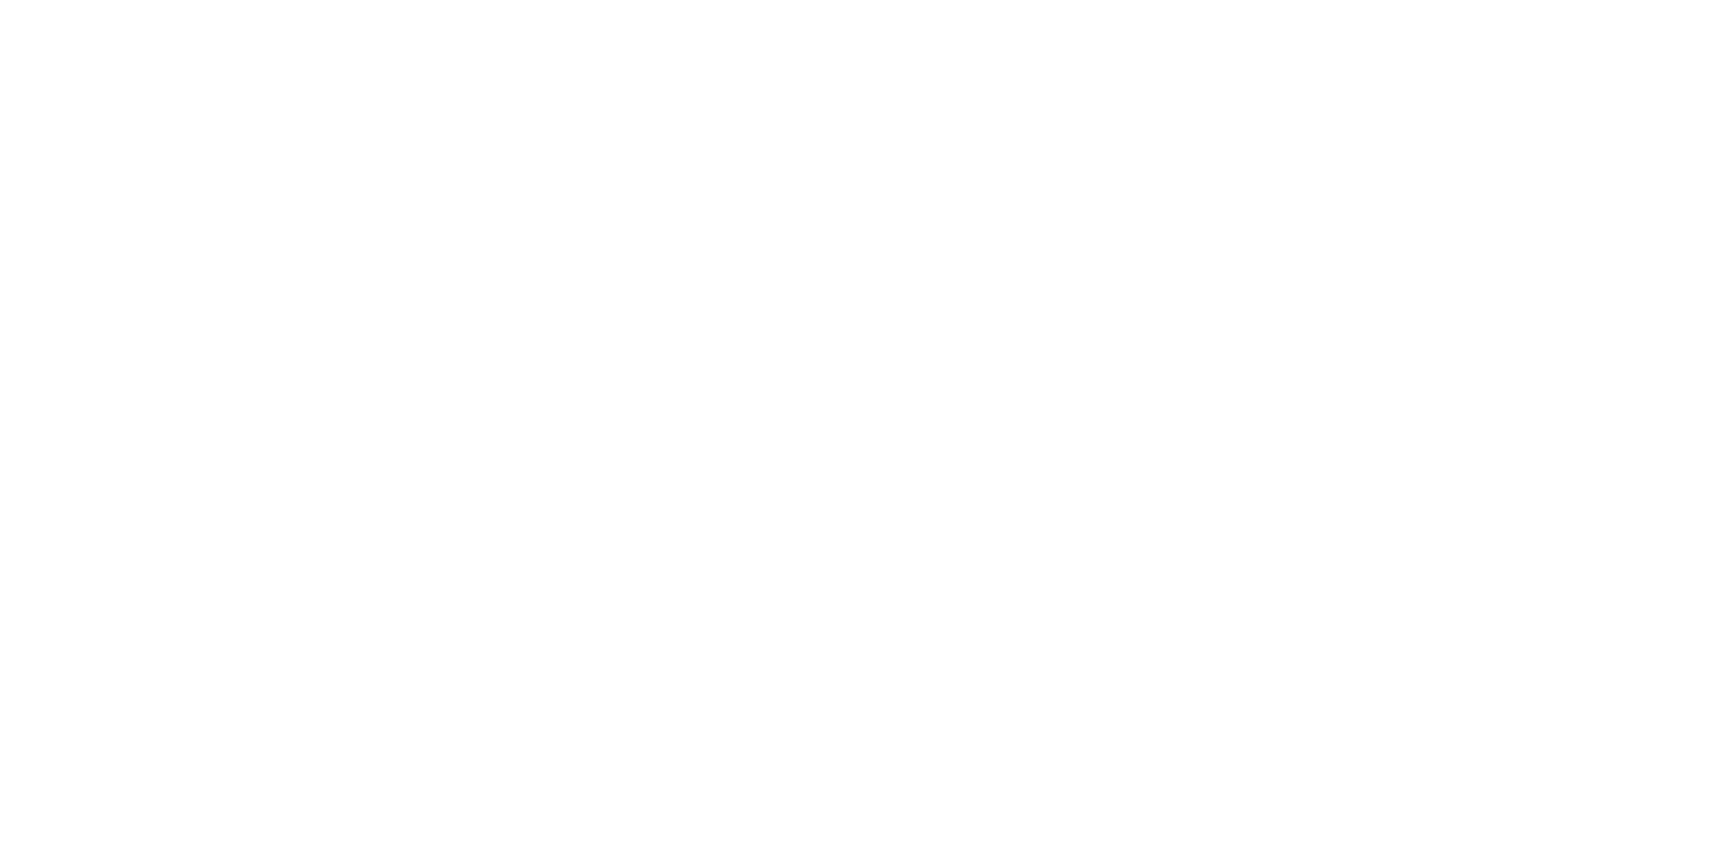 Jay Mechanical